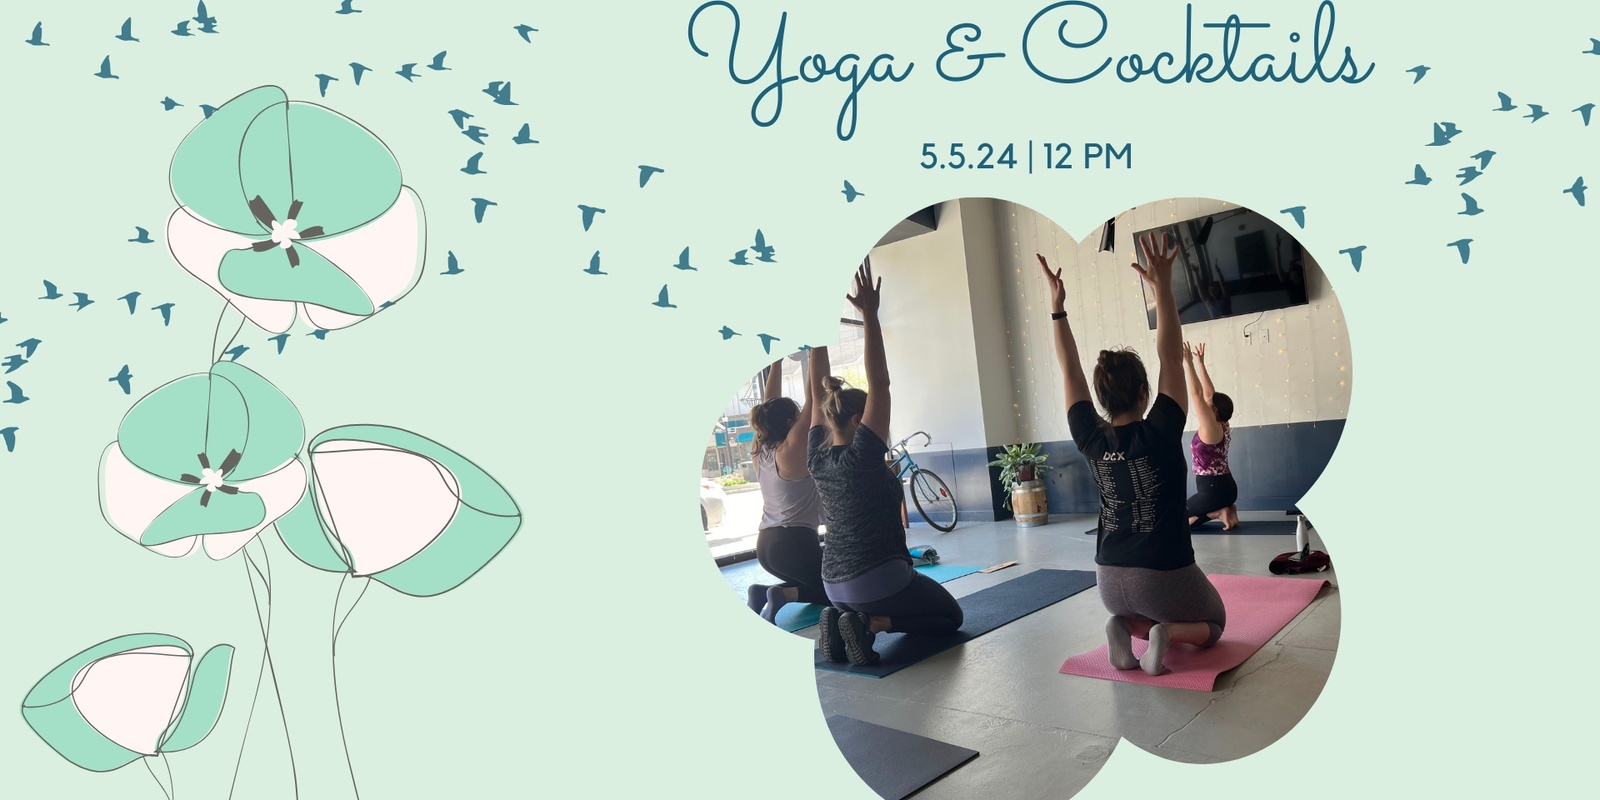 Banner image for Yoga & Cocktails